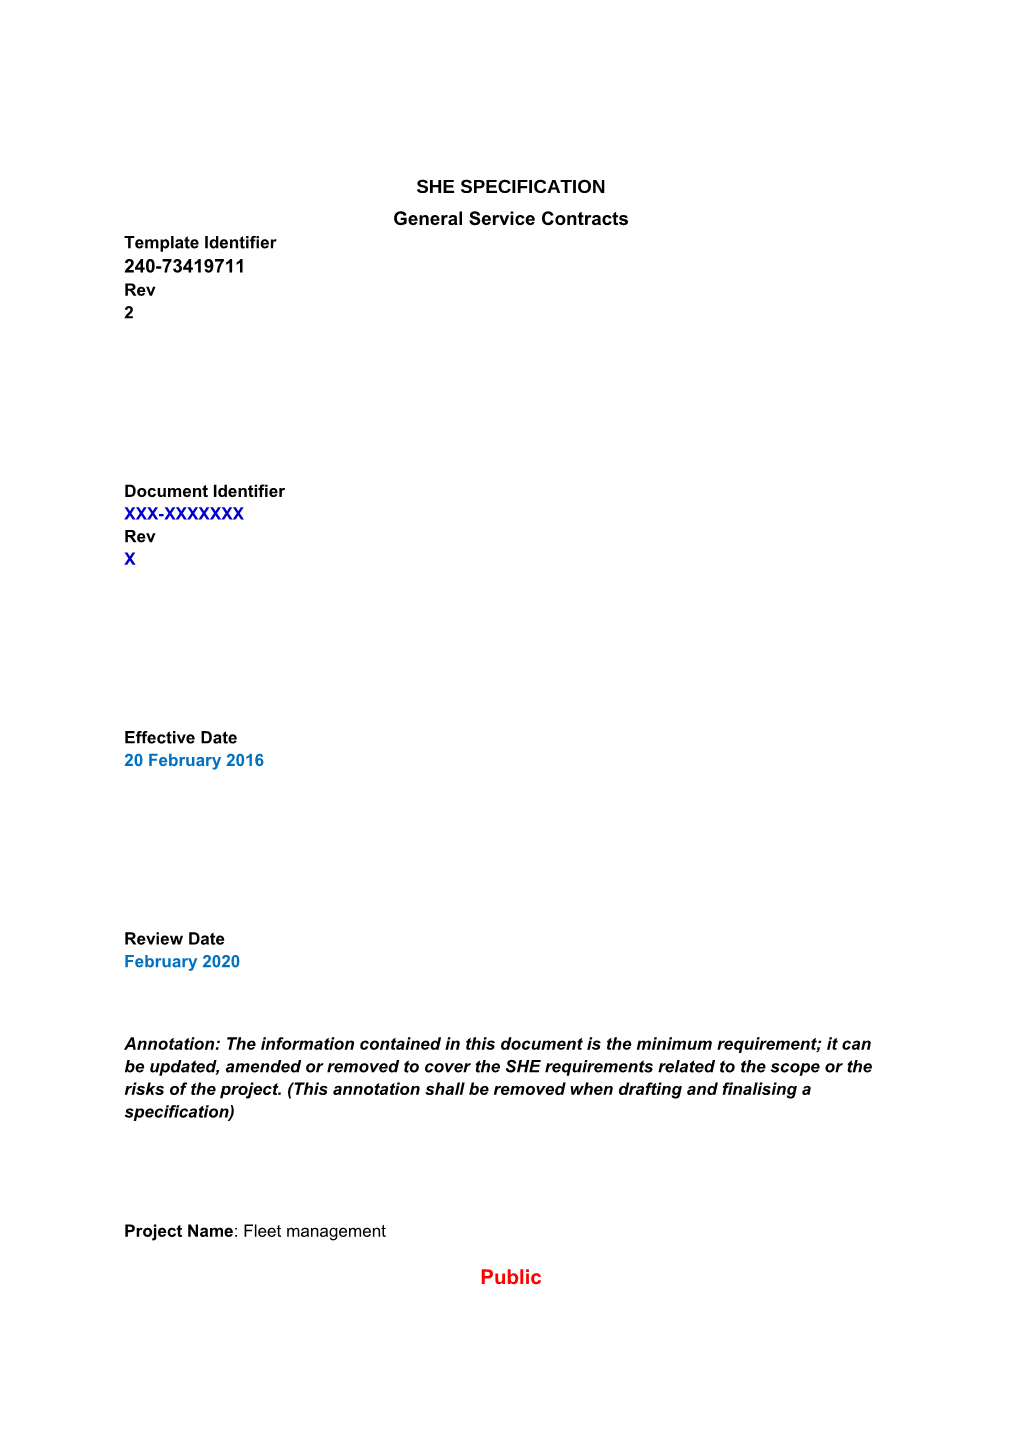 Project Address: Eskom Holdings SOC Ltd